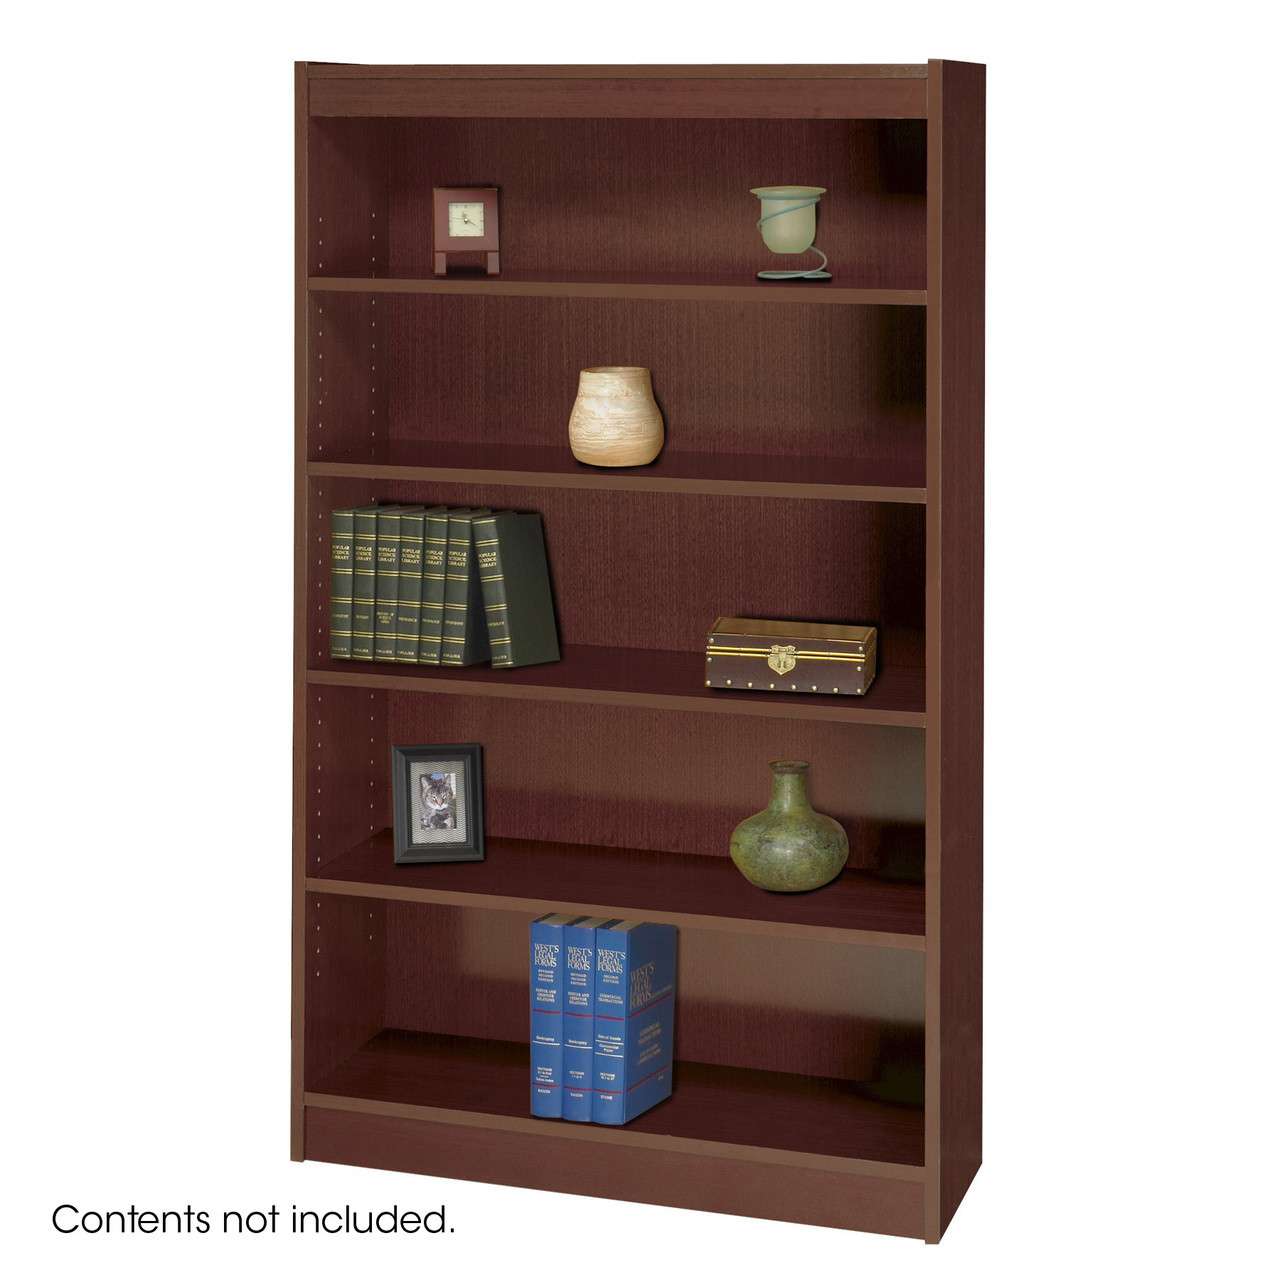 Square-Edge Veneer Bookcase - 5 Shelf